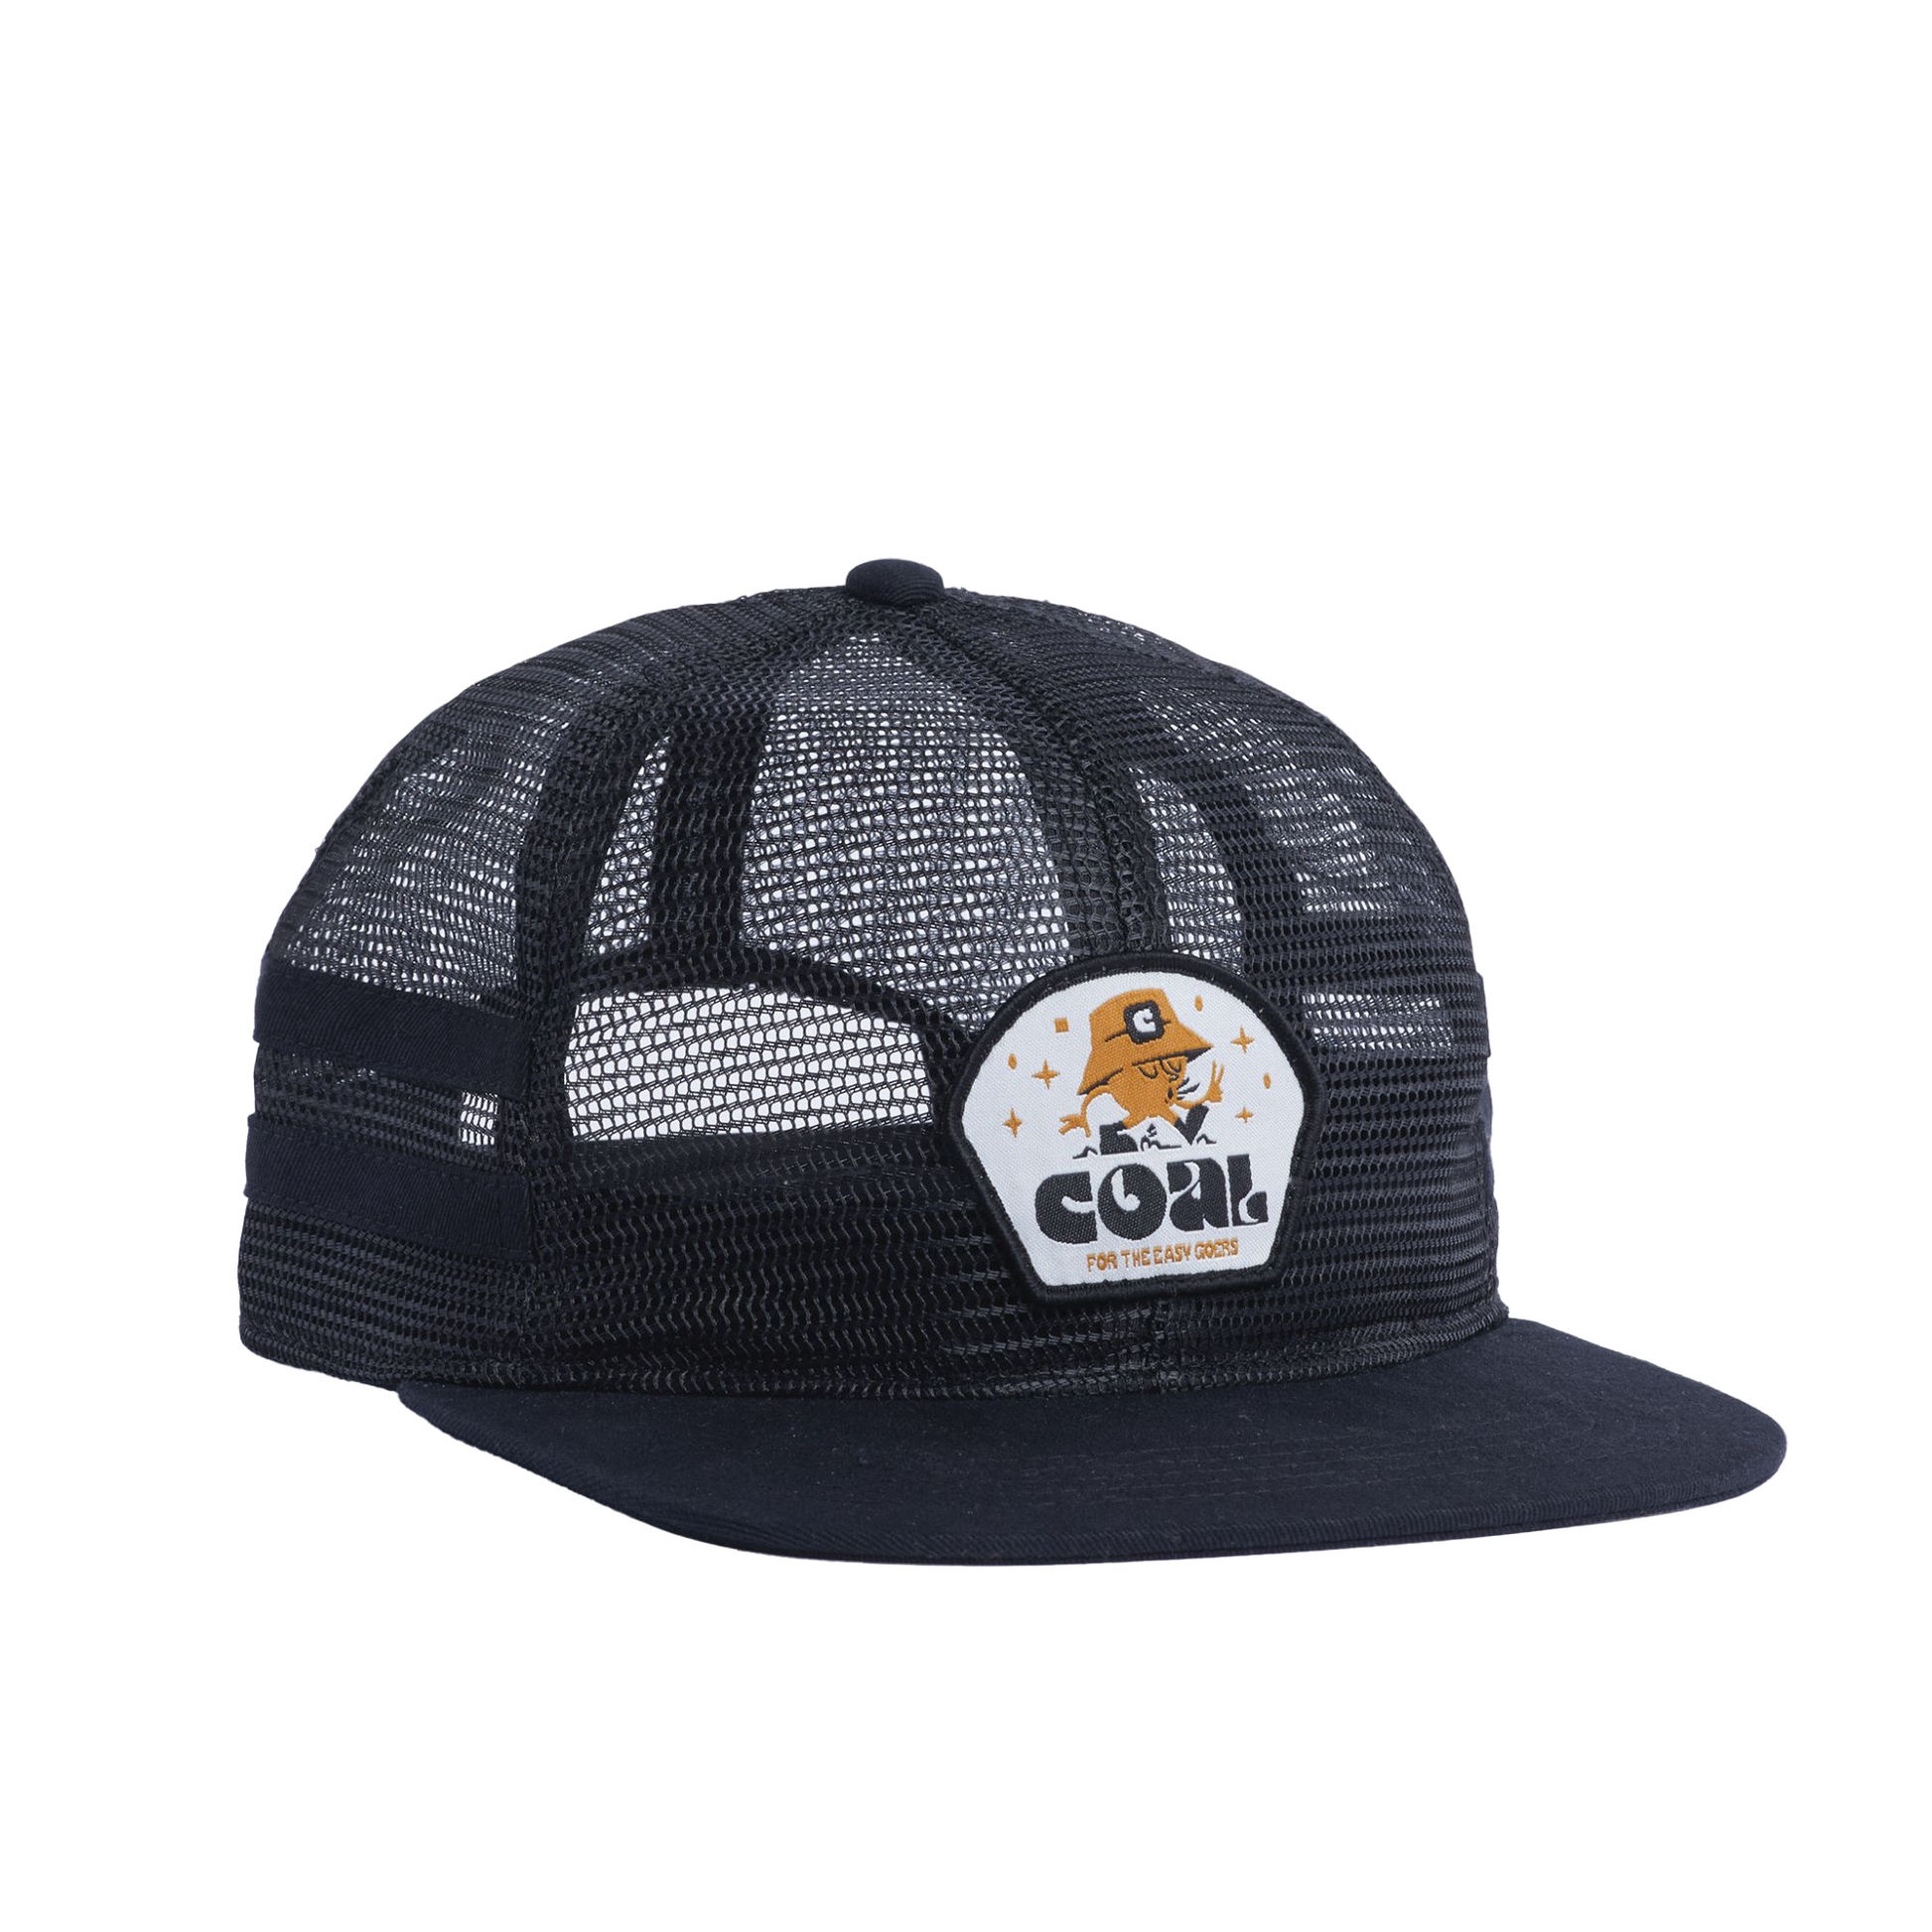 Coal Ripley Hat Black OS Hats